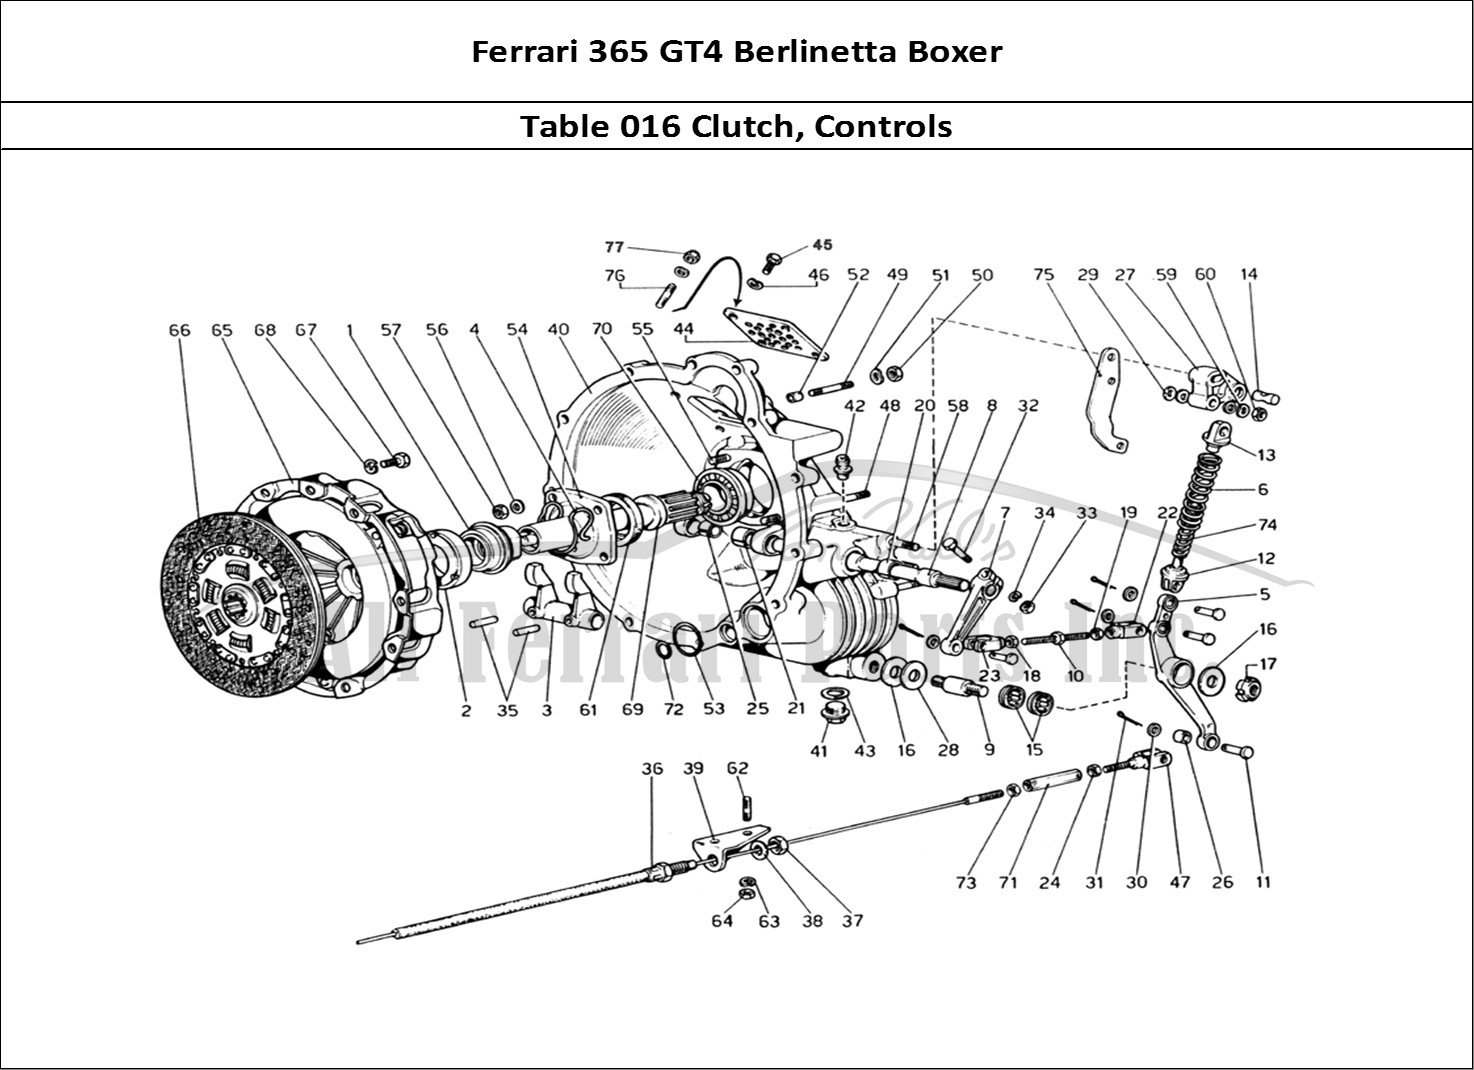 Ferrari Parts Ferrari 365 GT4 Berlinetta Boxer Page 016 Clutch and Controls